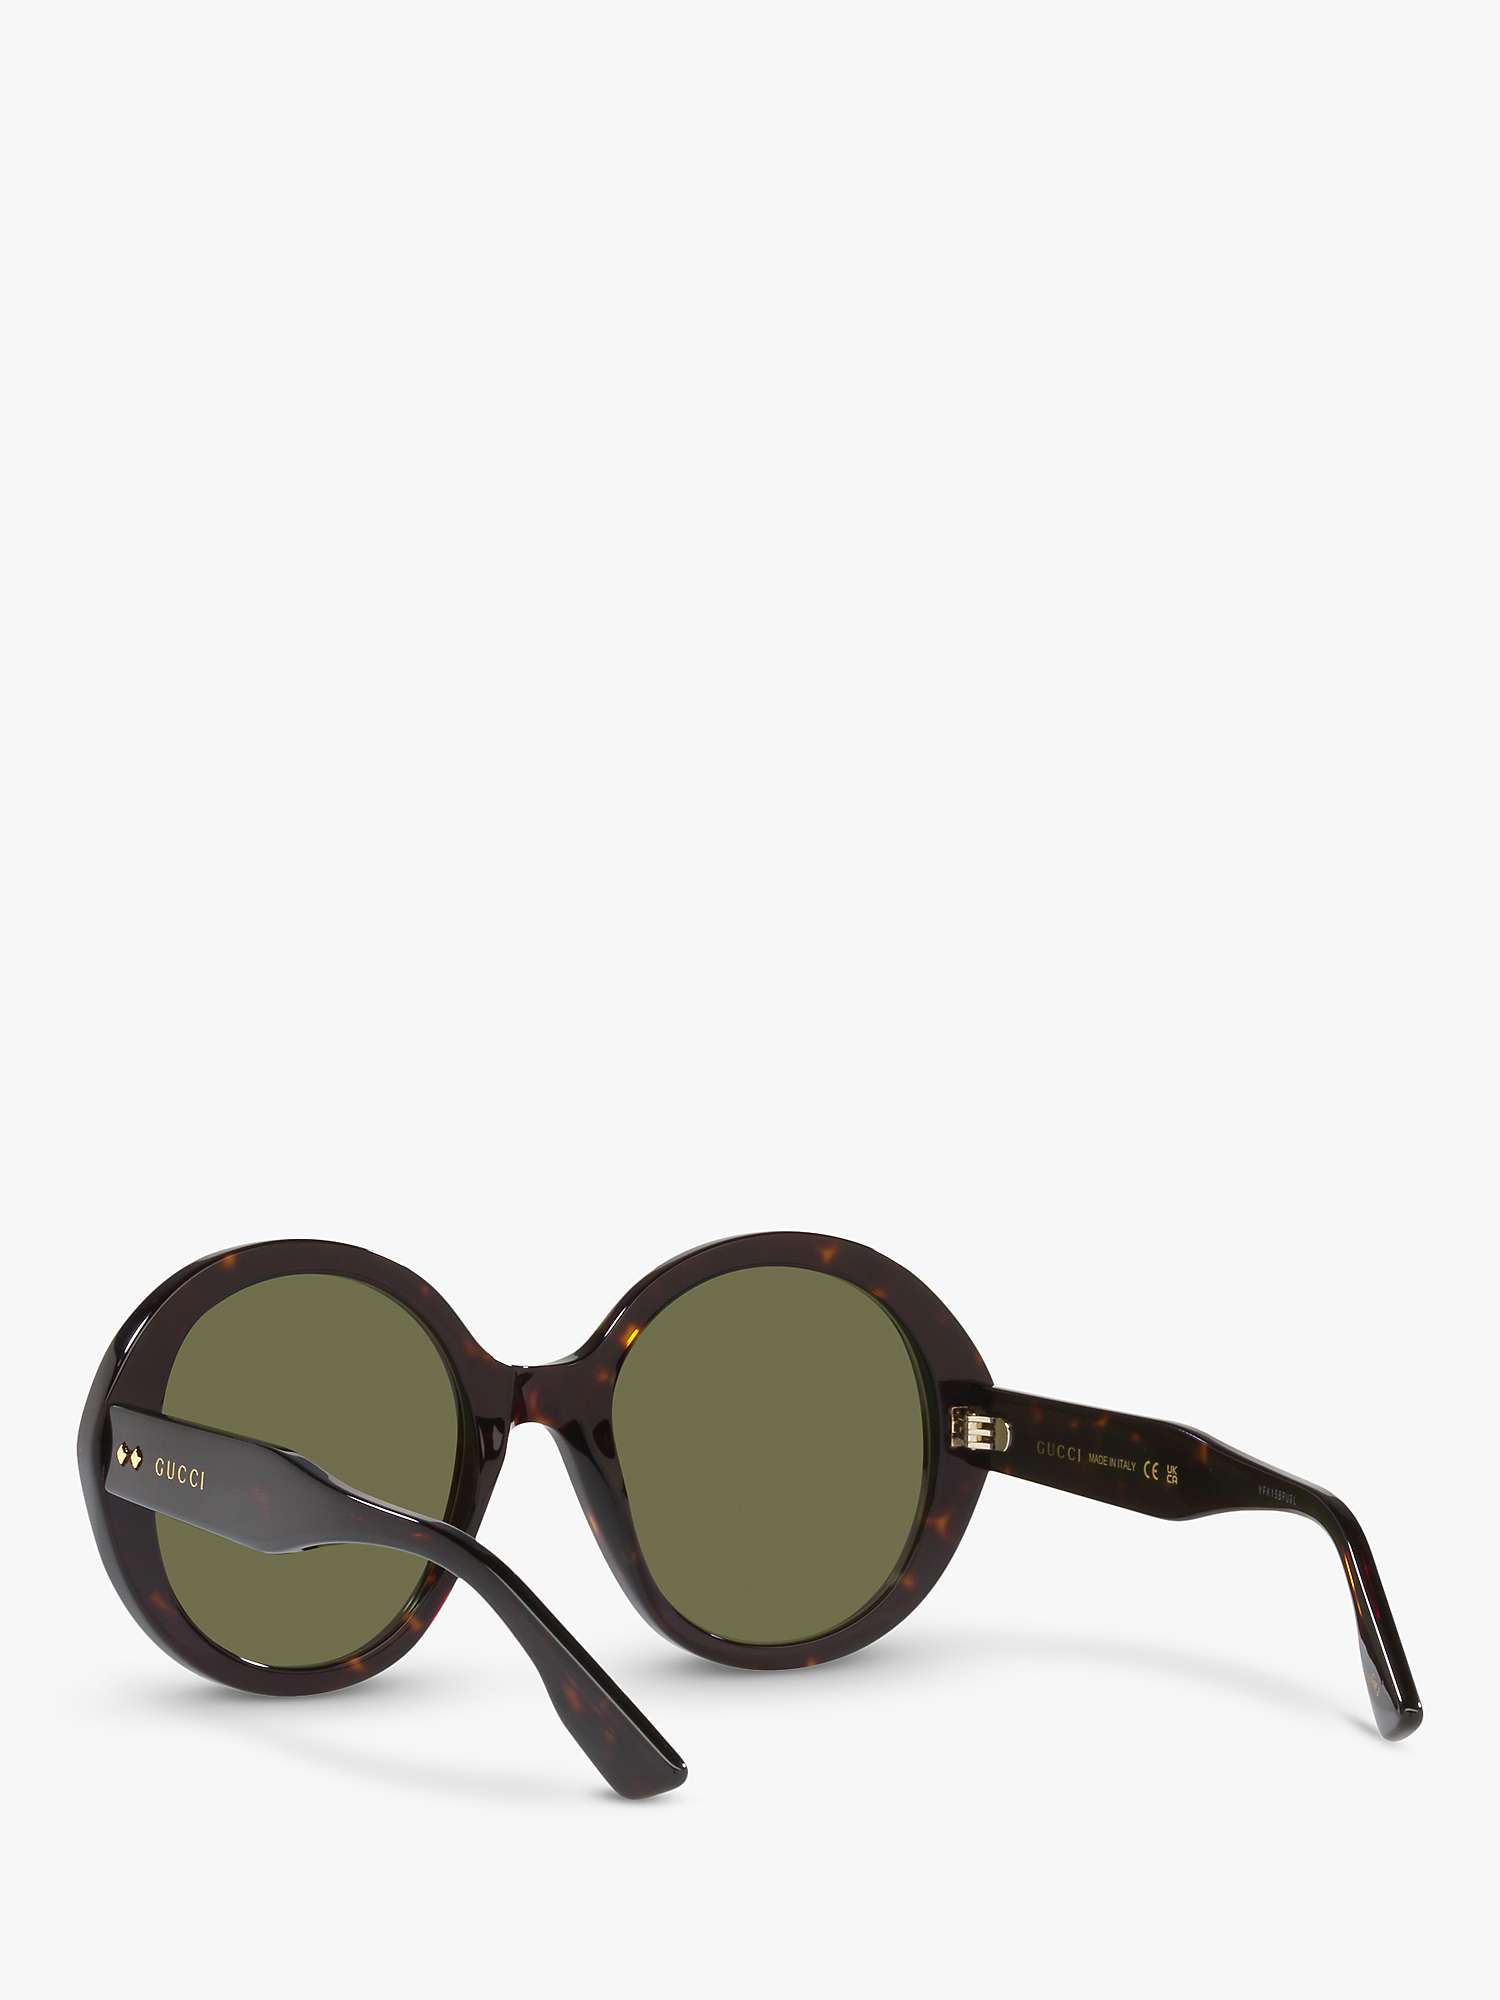 Buy Gucci GG1081S Unisex Round Sunglasses, Tortoise/Green Online at johnlewis.com